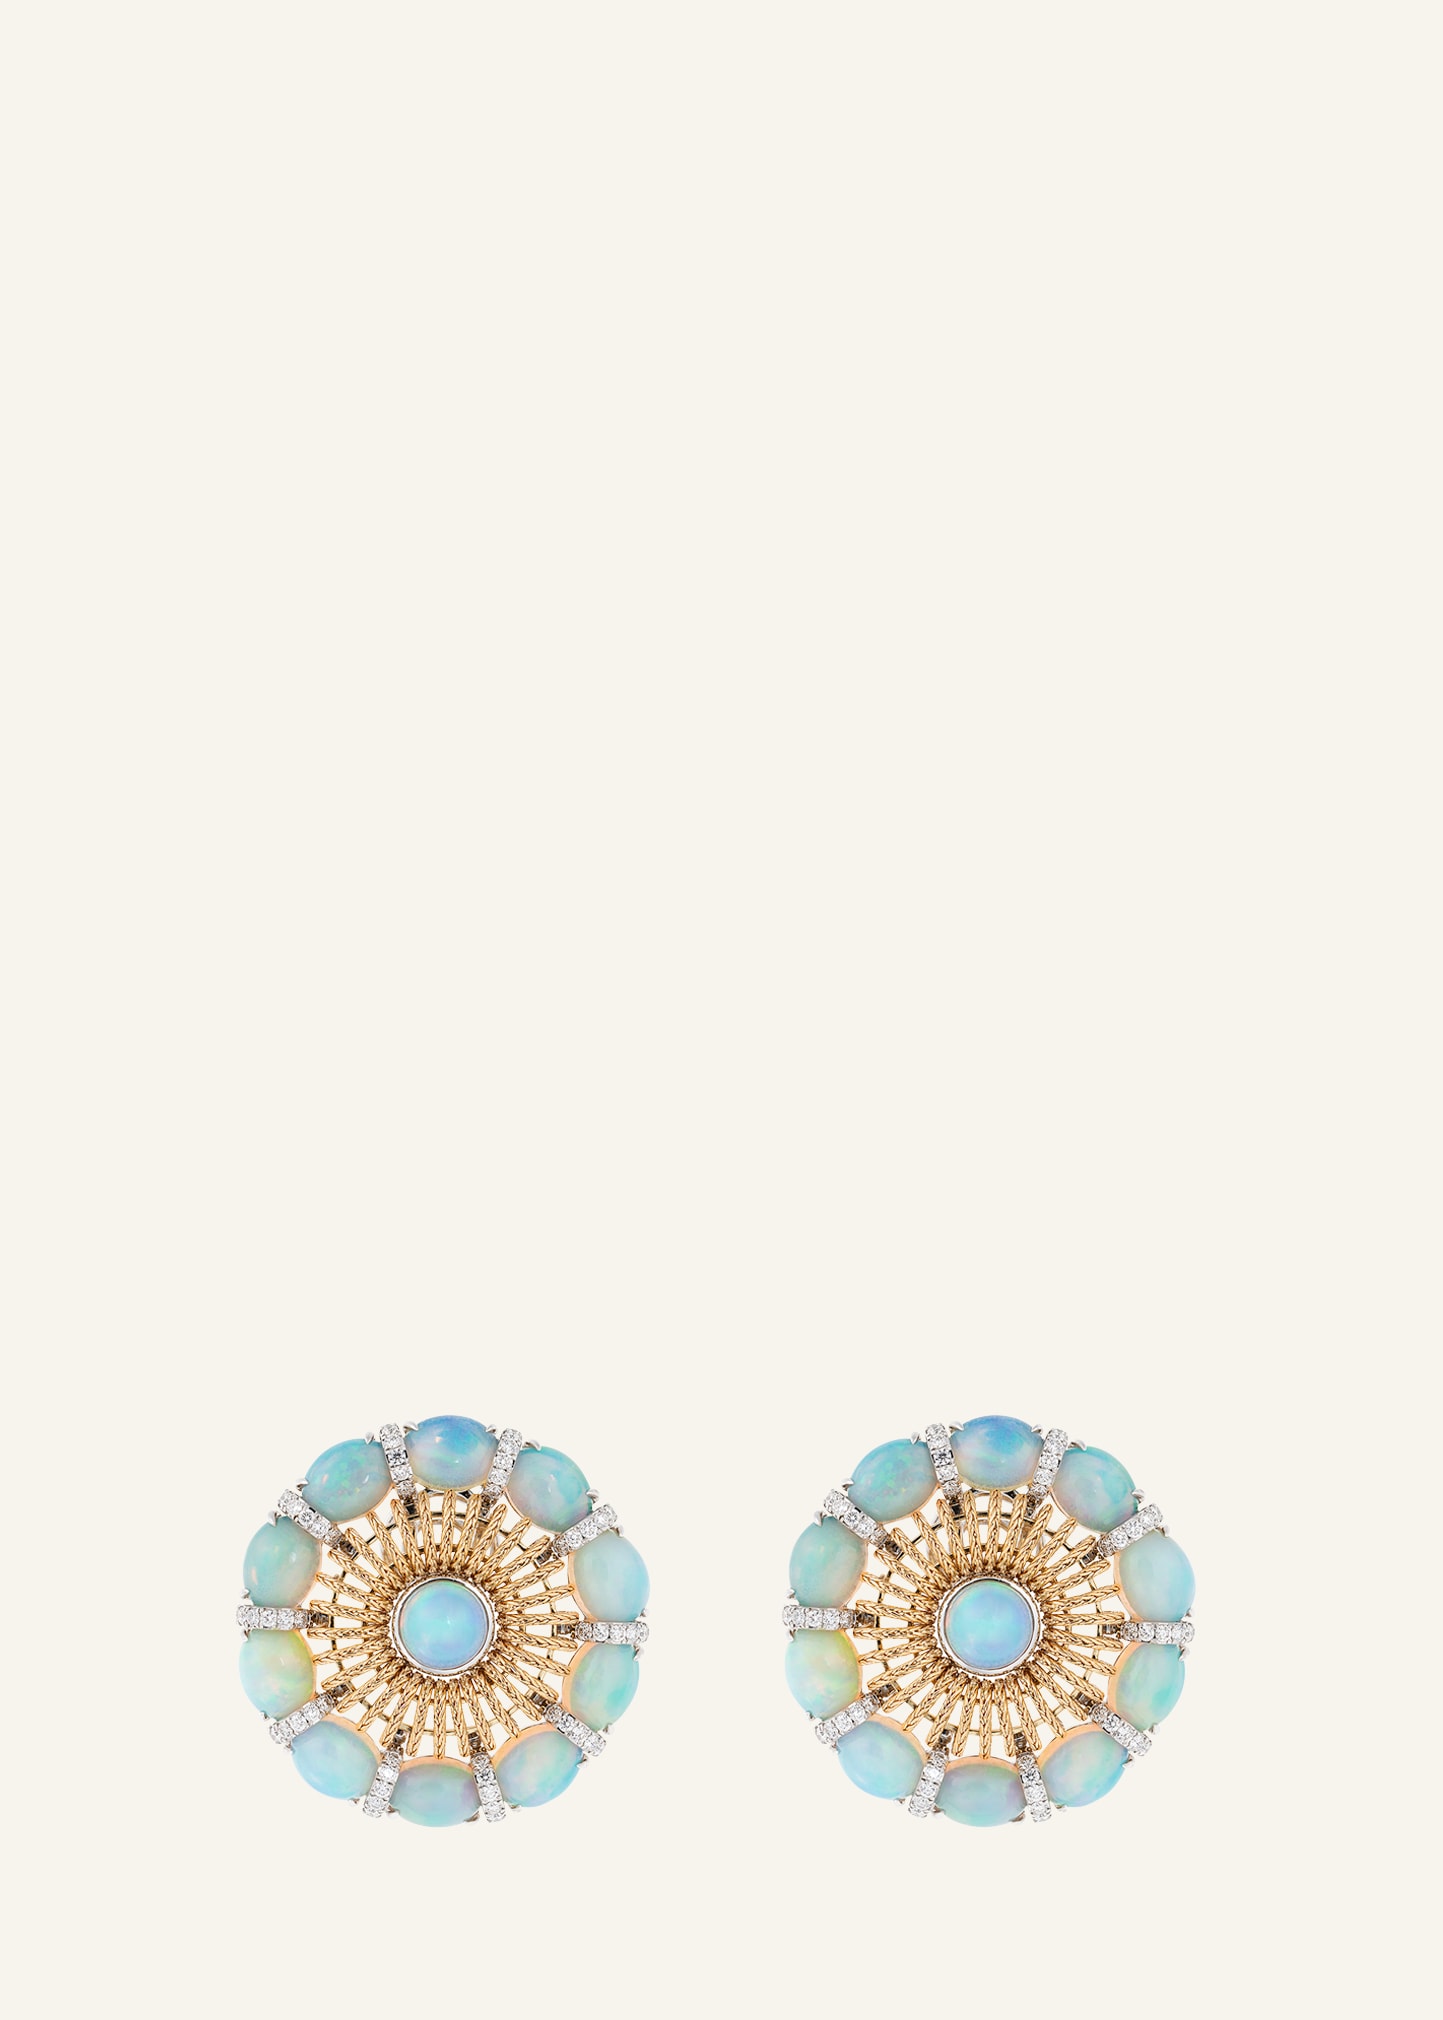 Together 18k Opal and Diamond Earrings